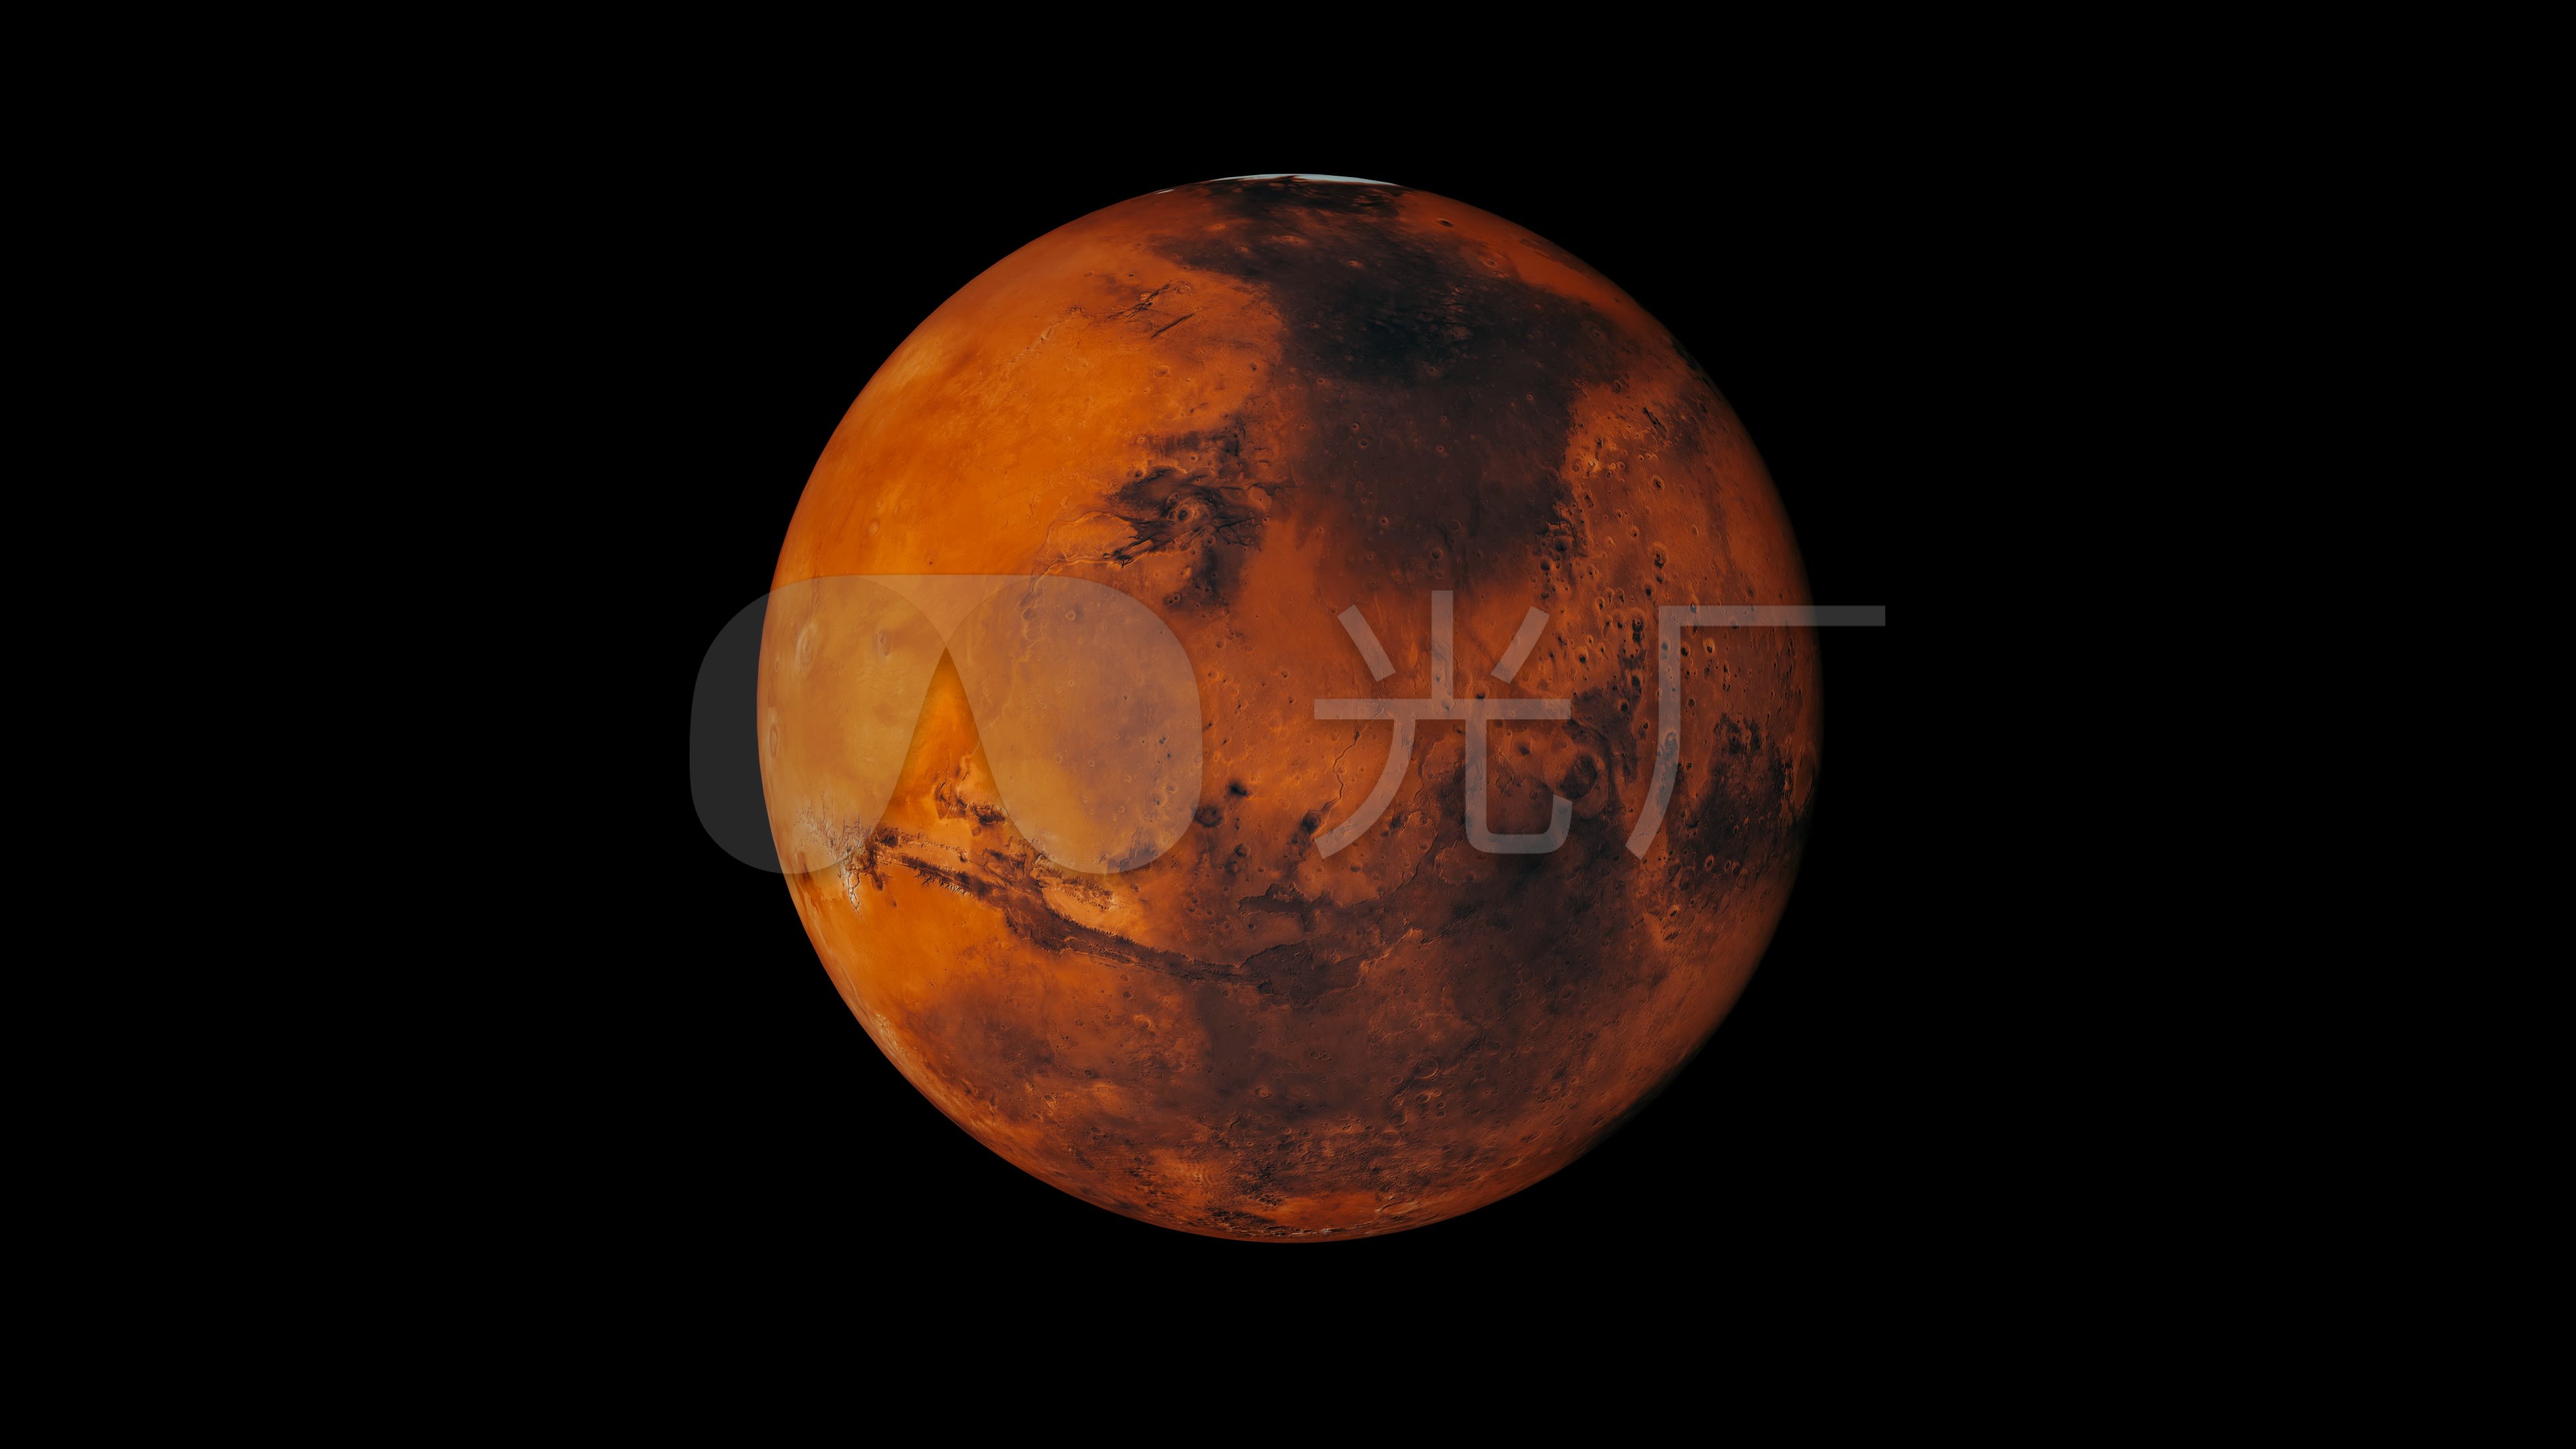 【4k】带通道的火星自转_3840x2160_高清视频素材下载